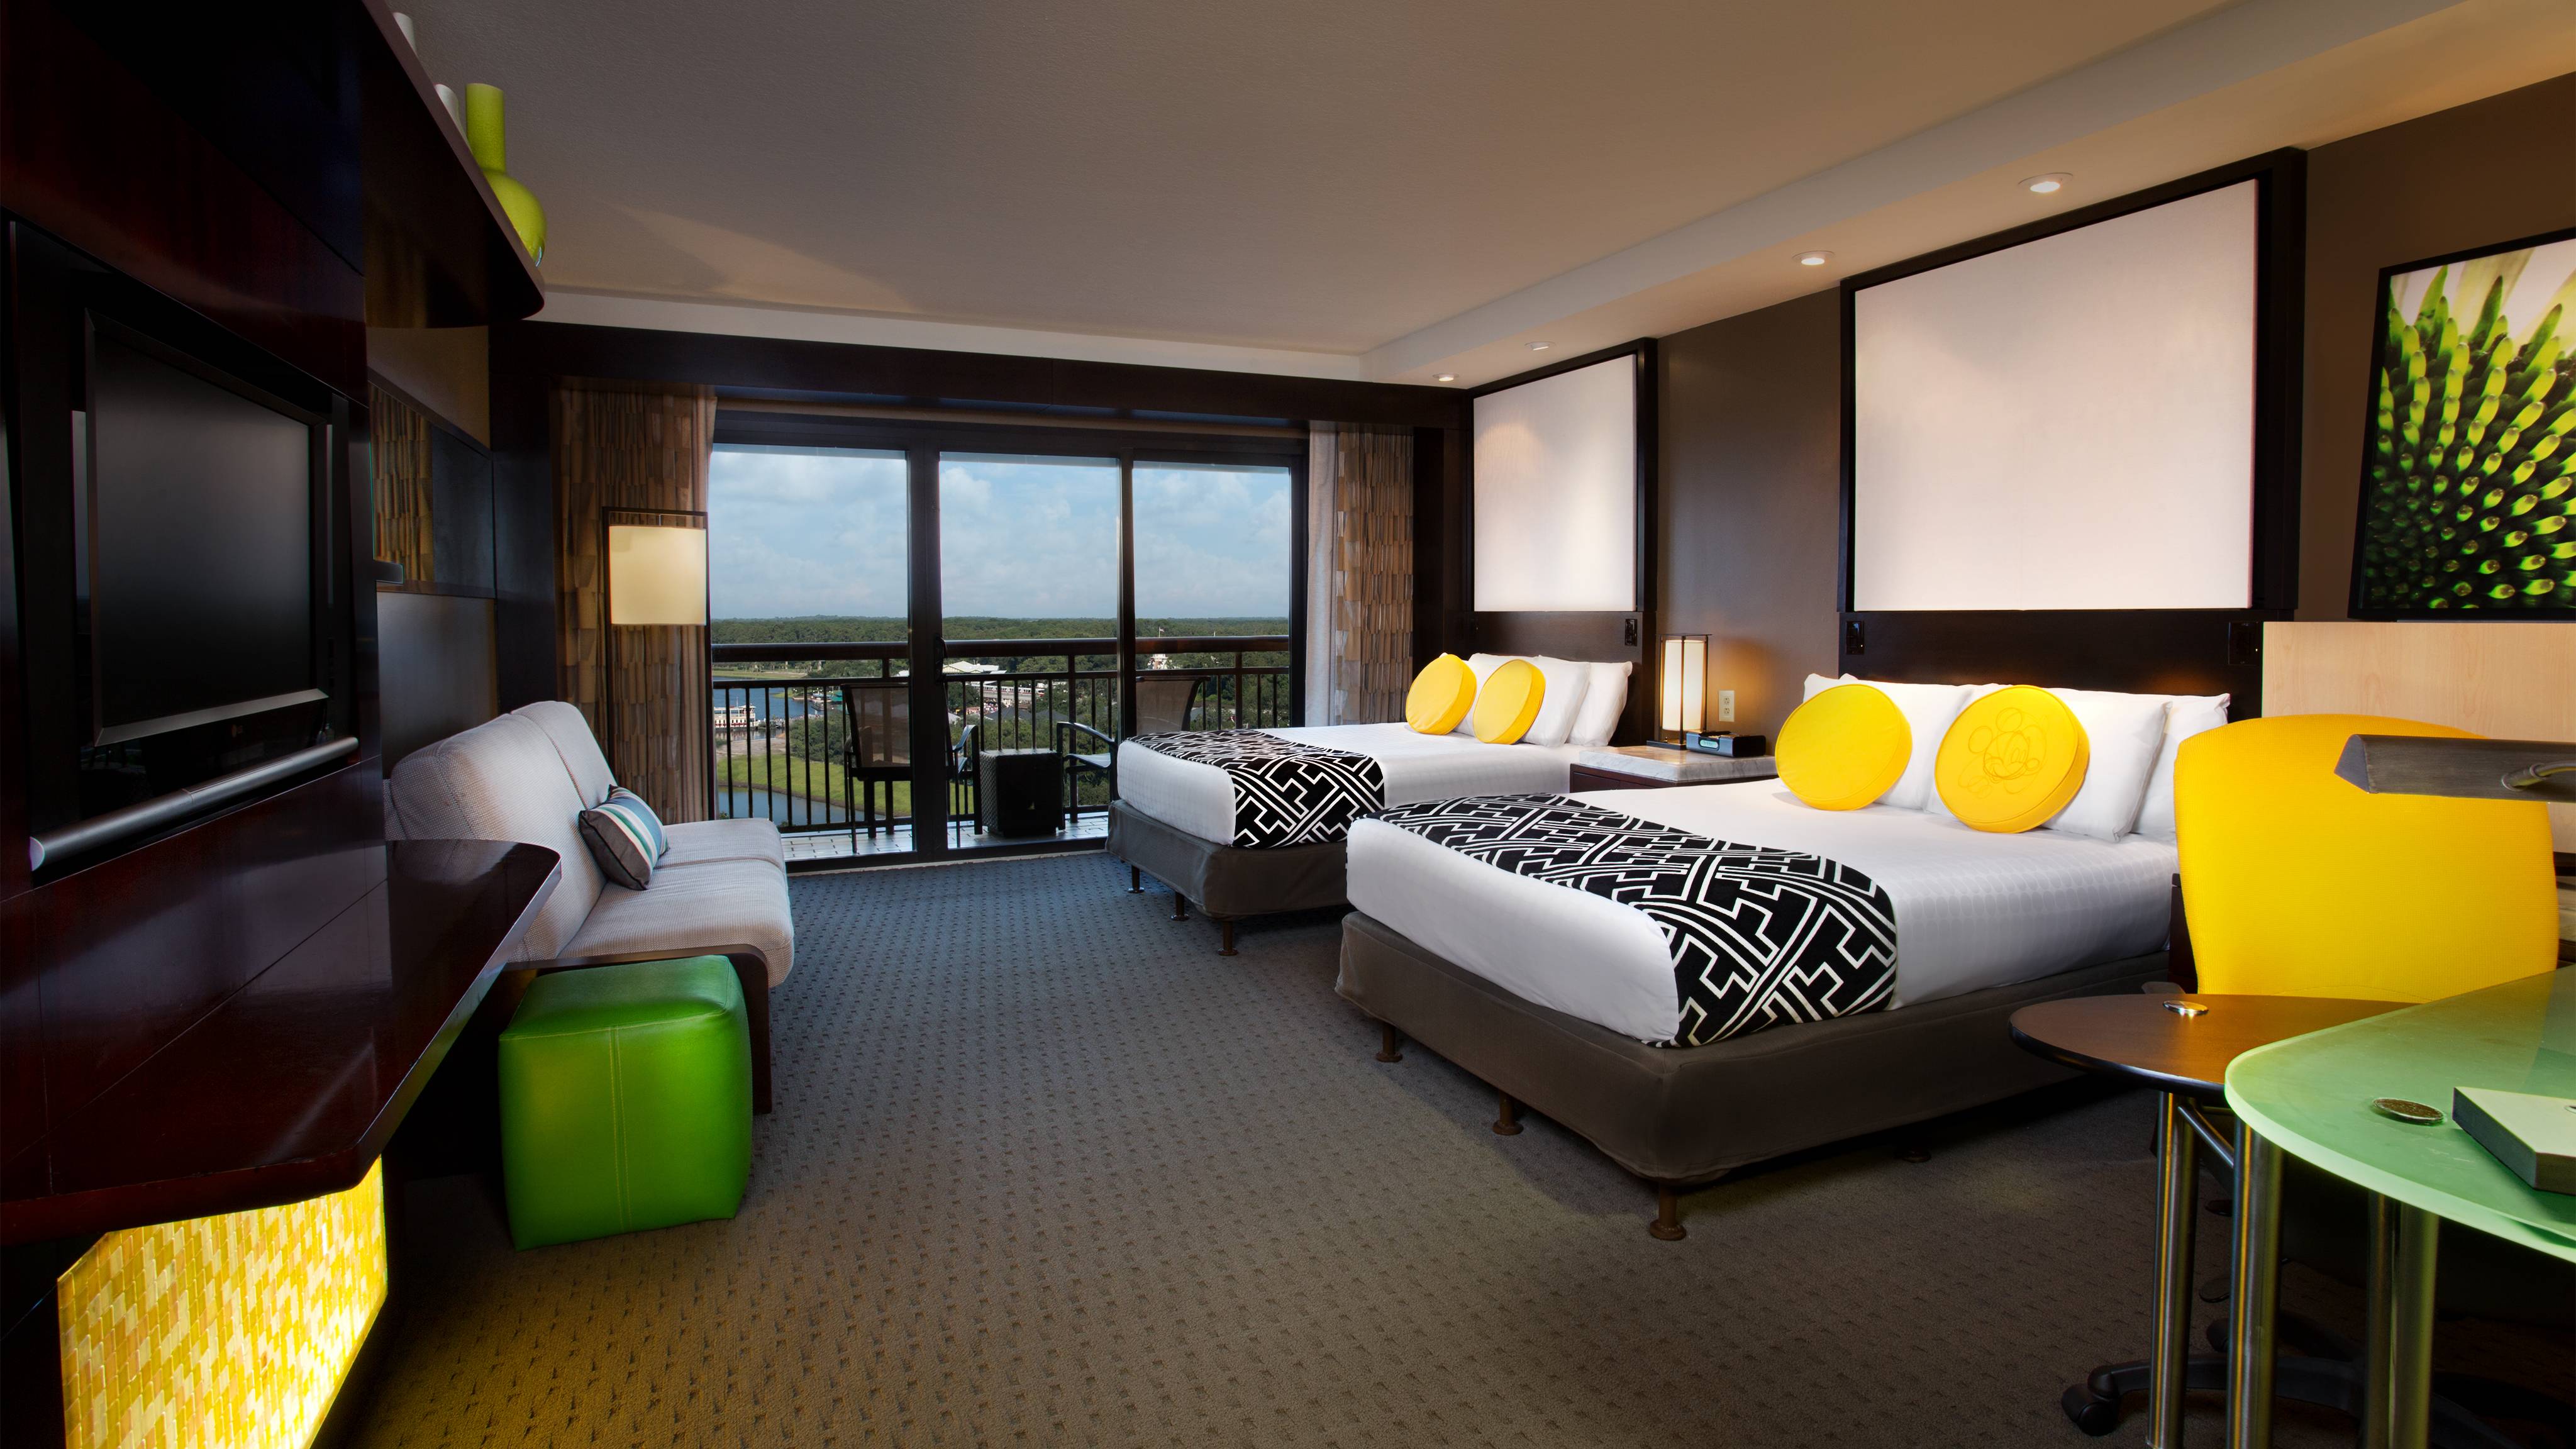 Contemporary Resort 2020 guest room interior